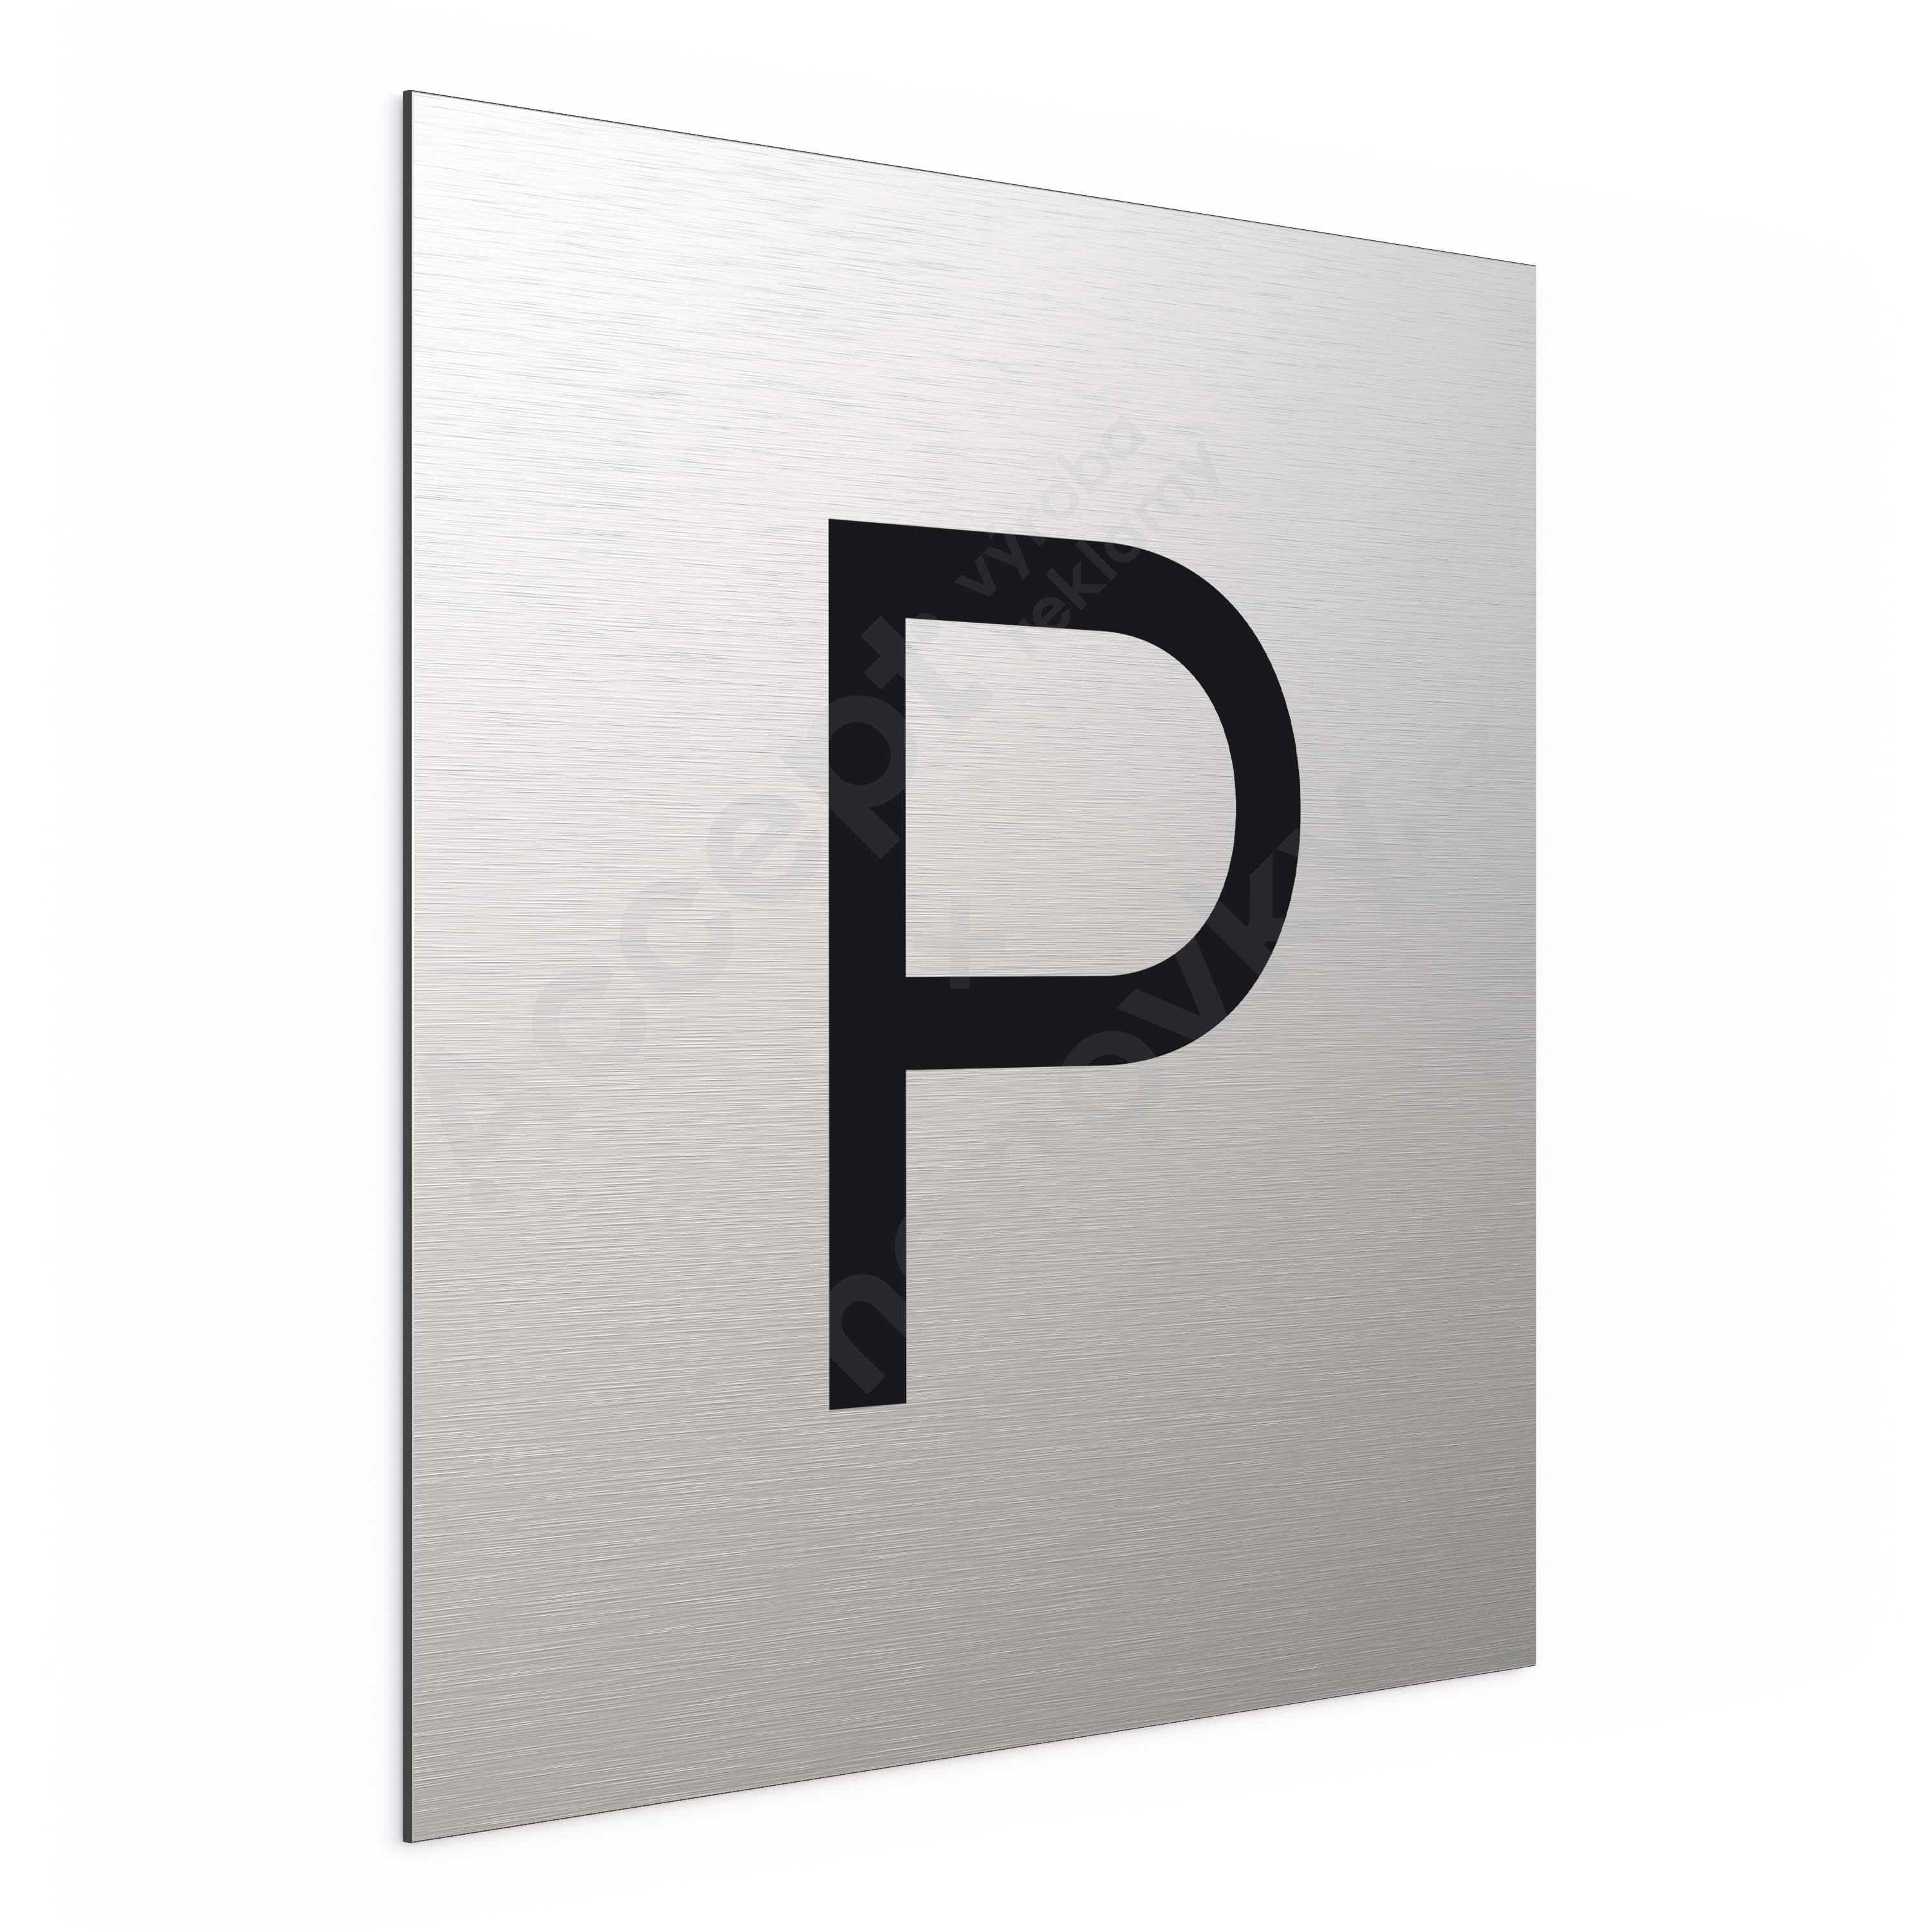 Označení podlaží - písmeno "P" - stříbrná tabulka - černý popis